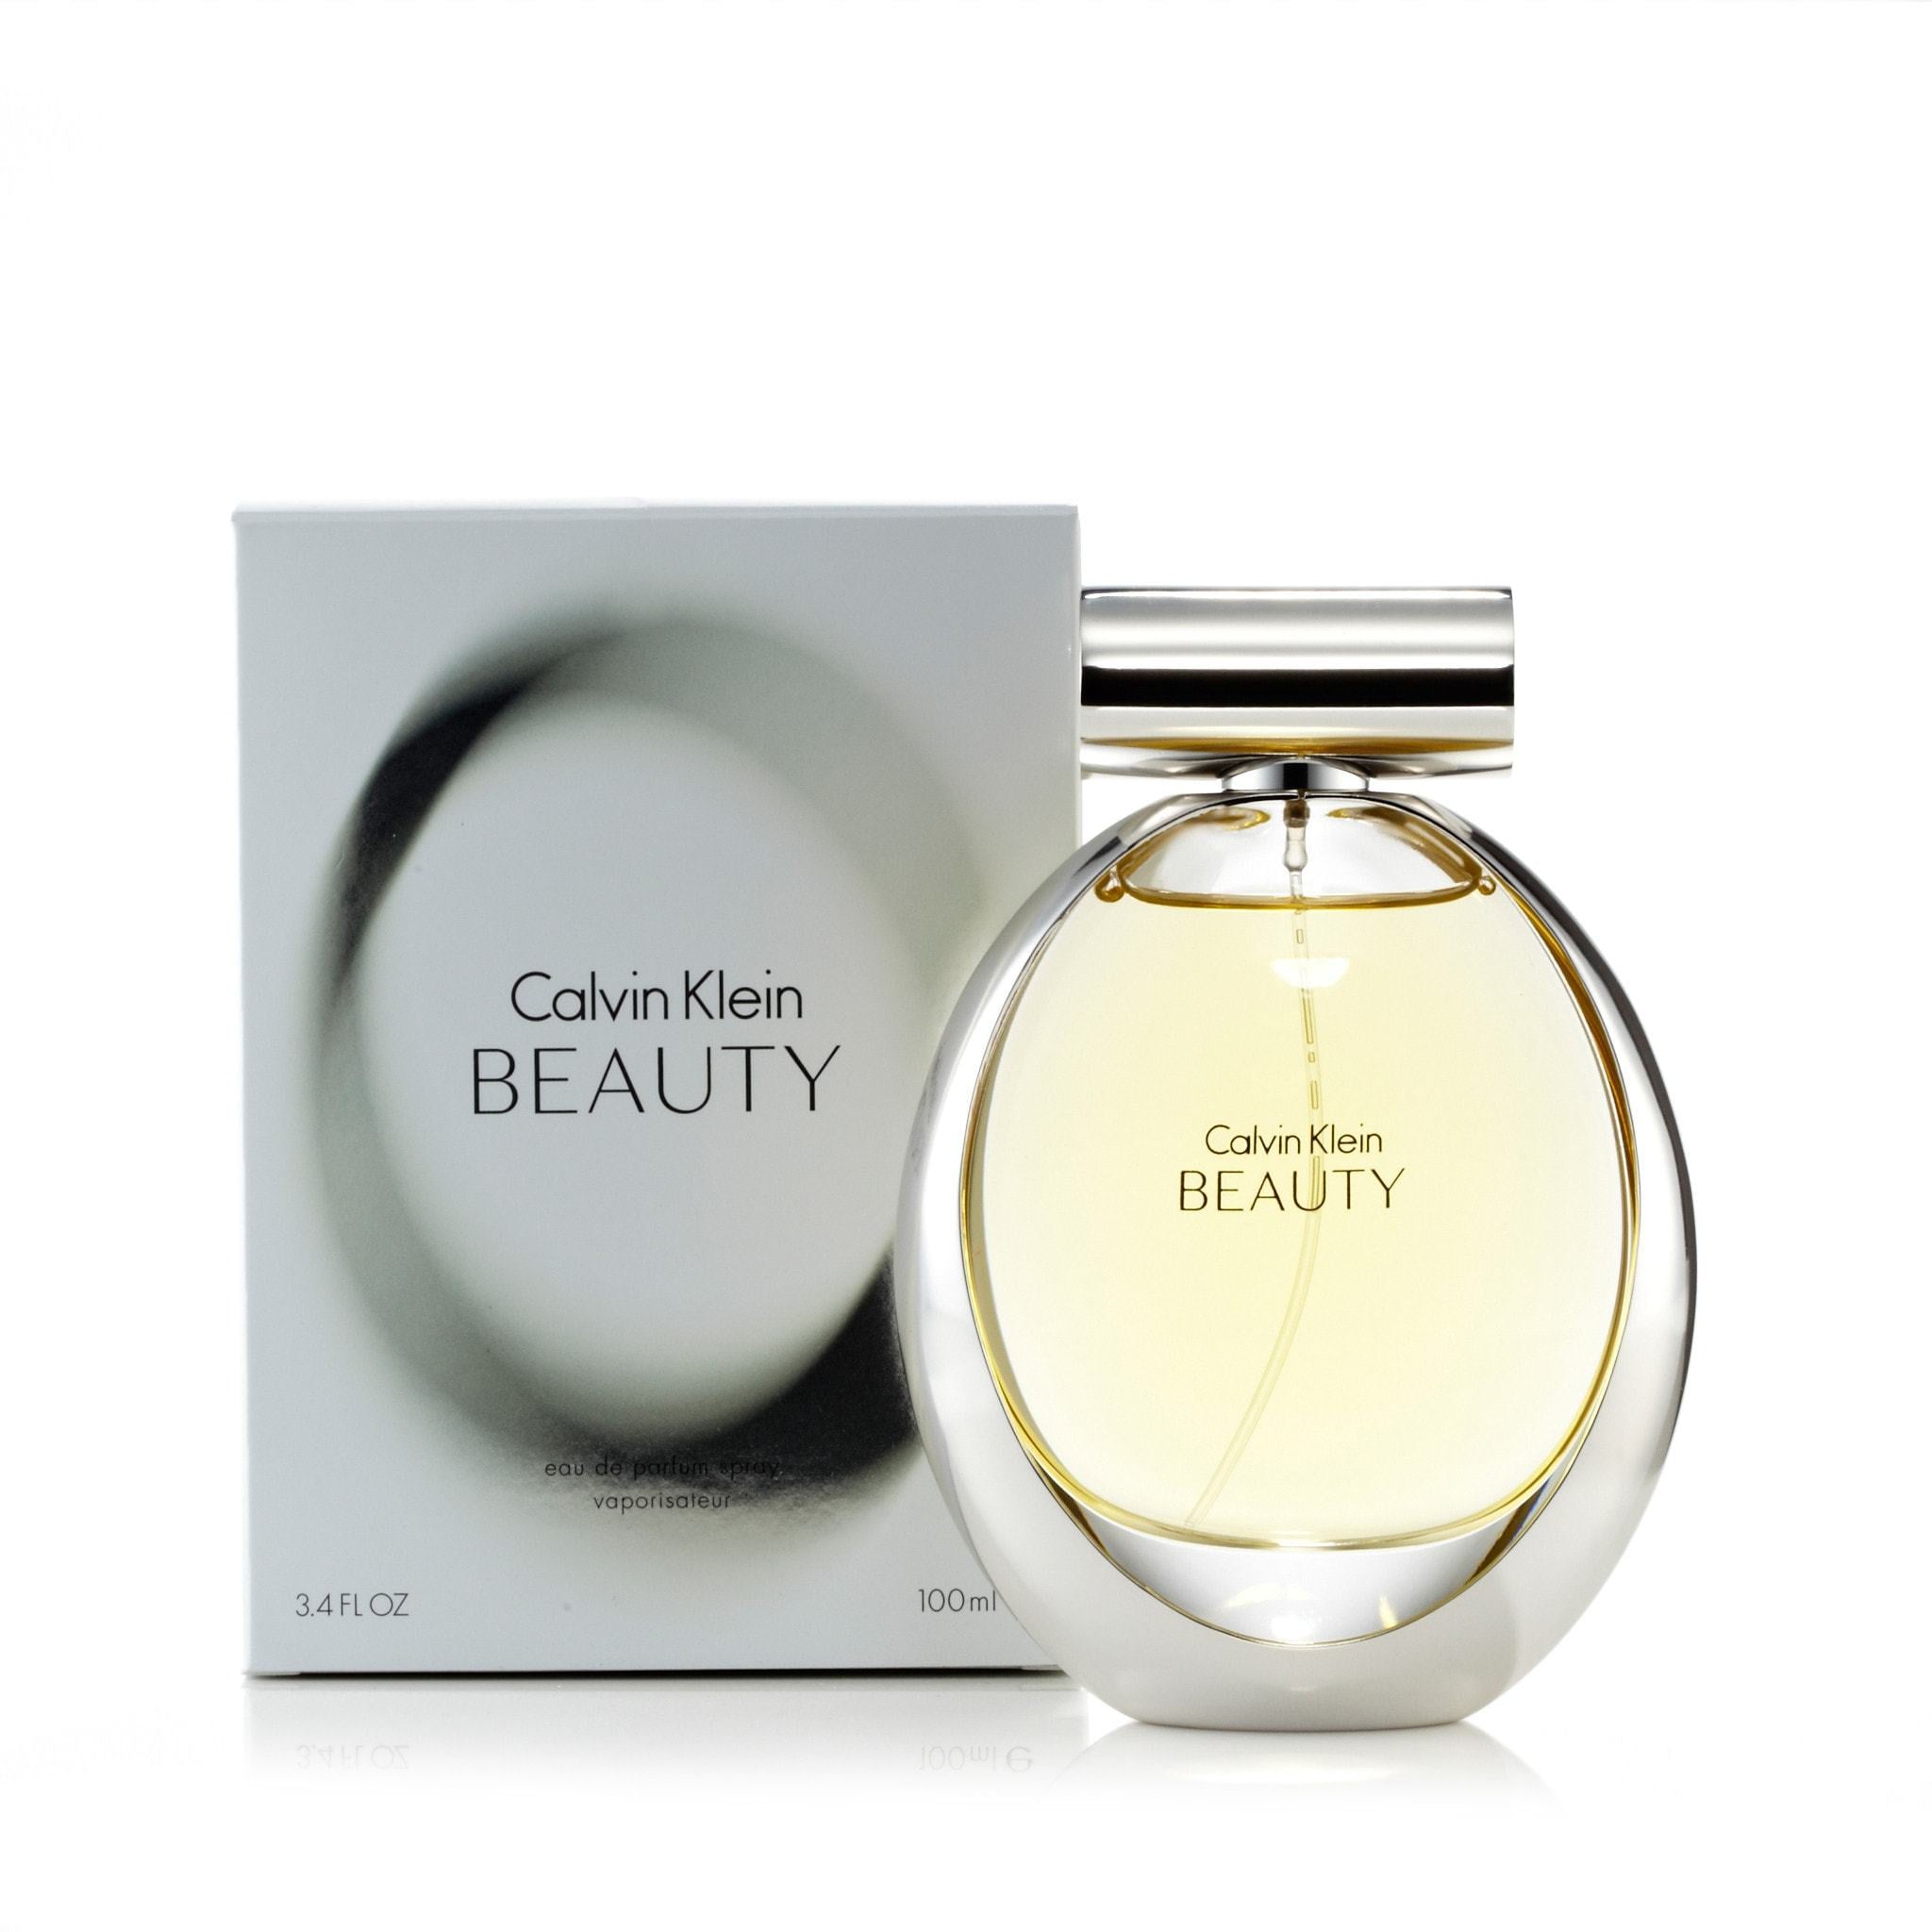 Beauty Eau de Parfum Spray for Women by Calvin Klein